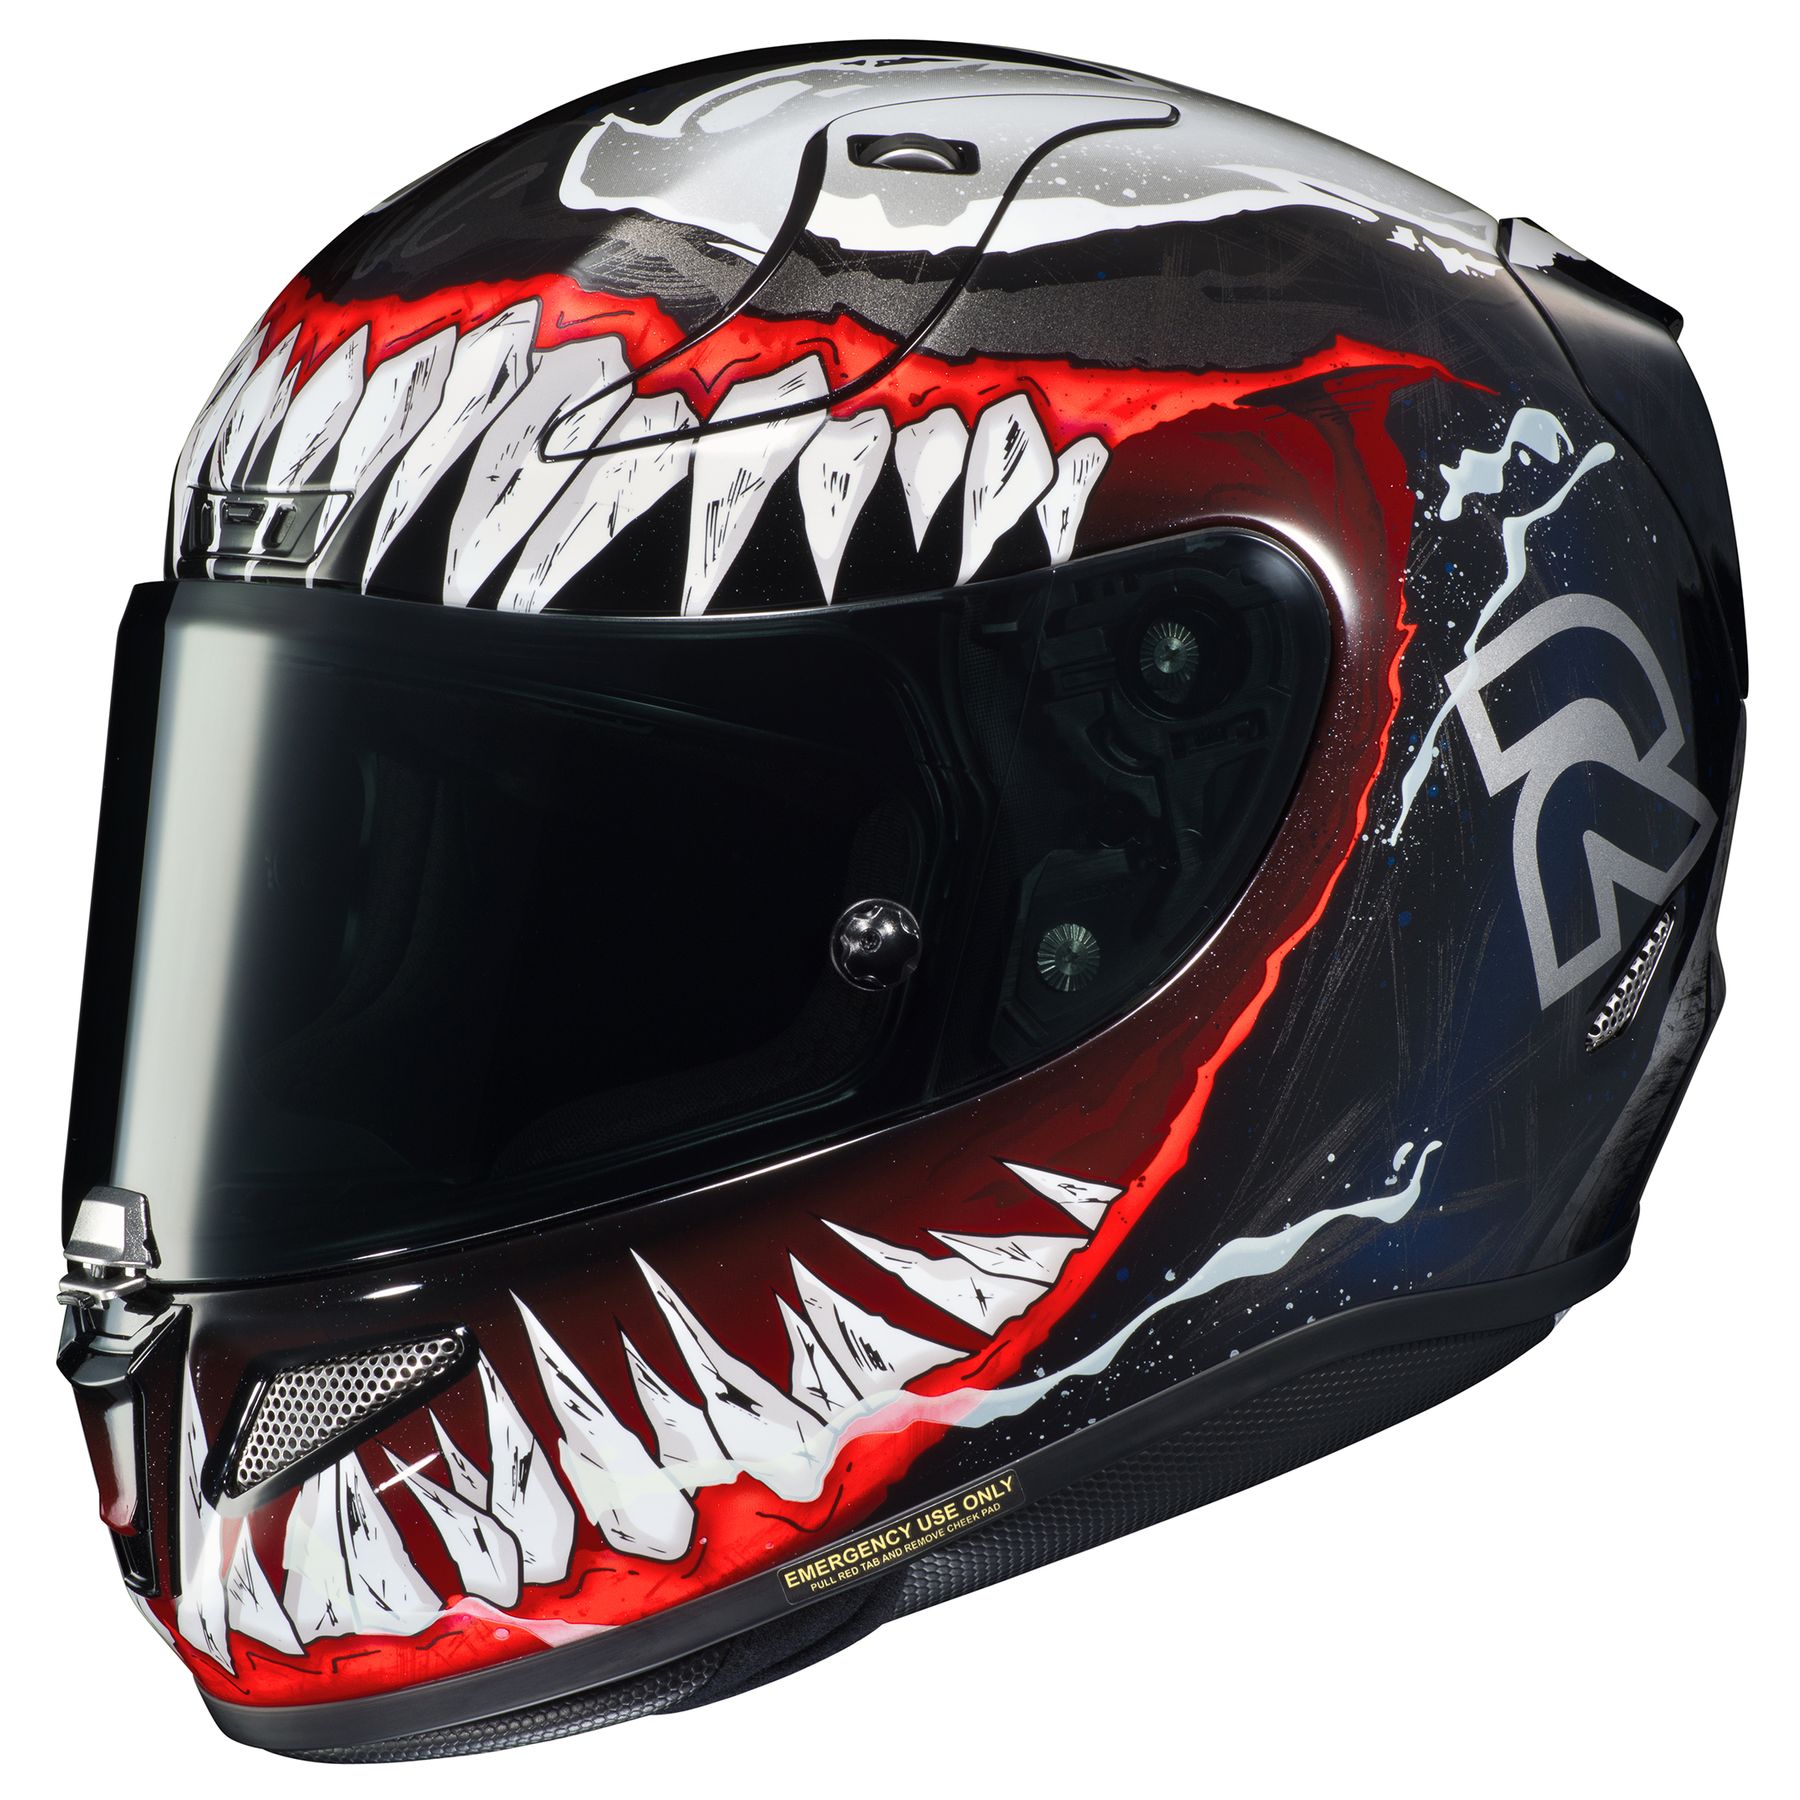 14 Helmets With Insane Graphics | BadassHelmetStore.com